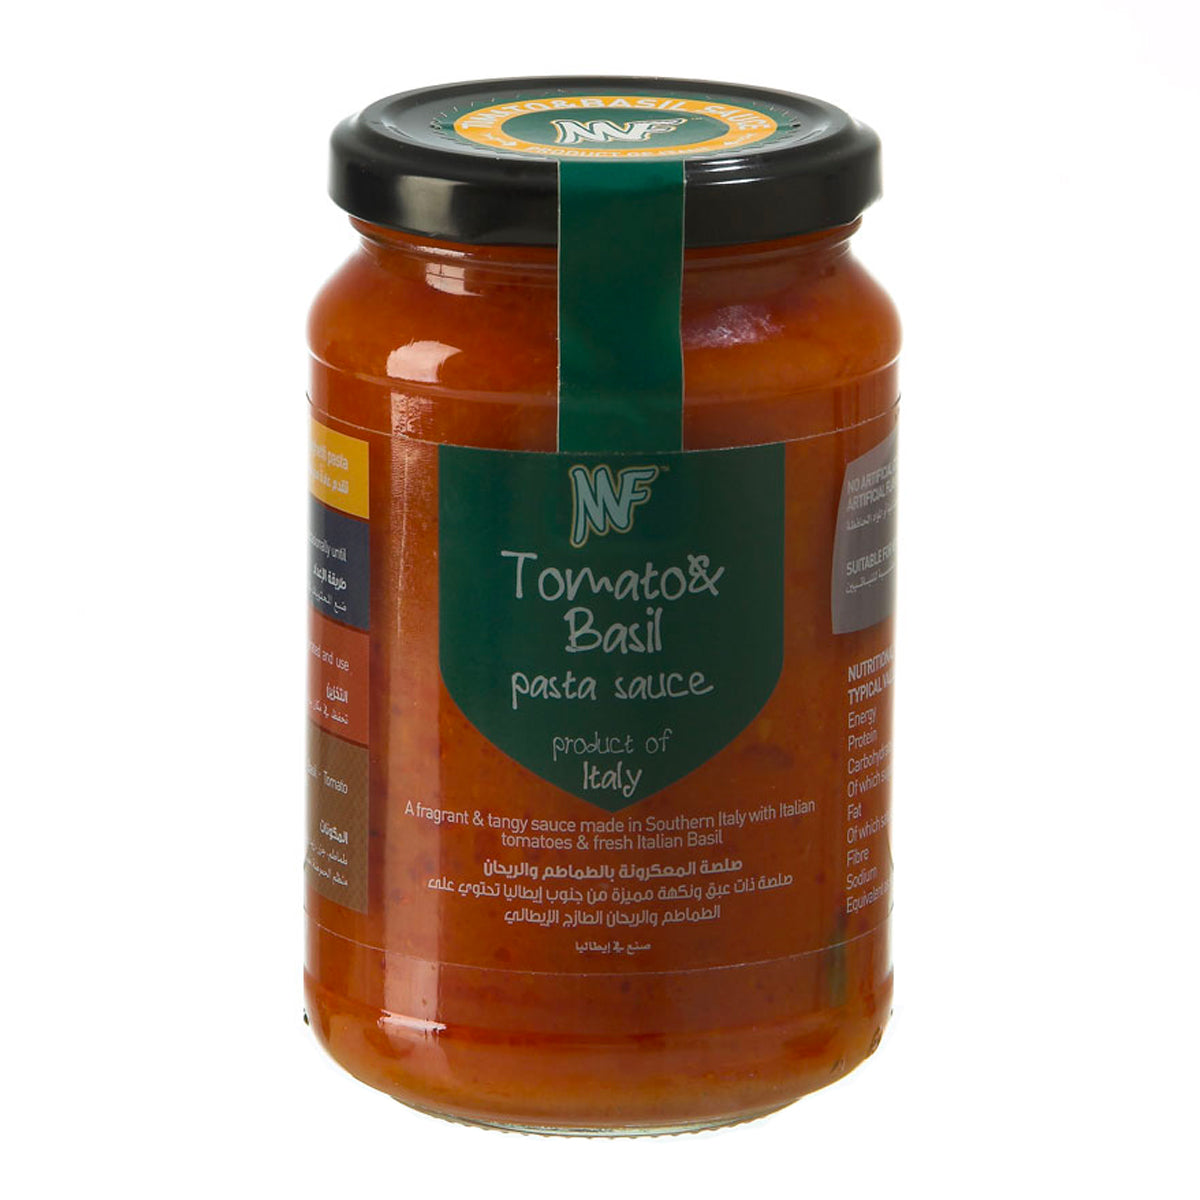 MF Tomato and Basil Pasta Sauce 350g